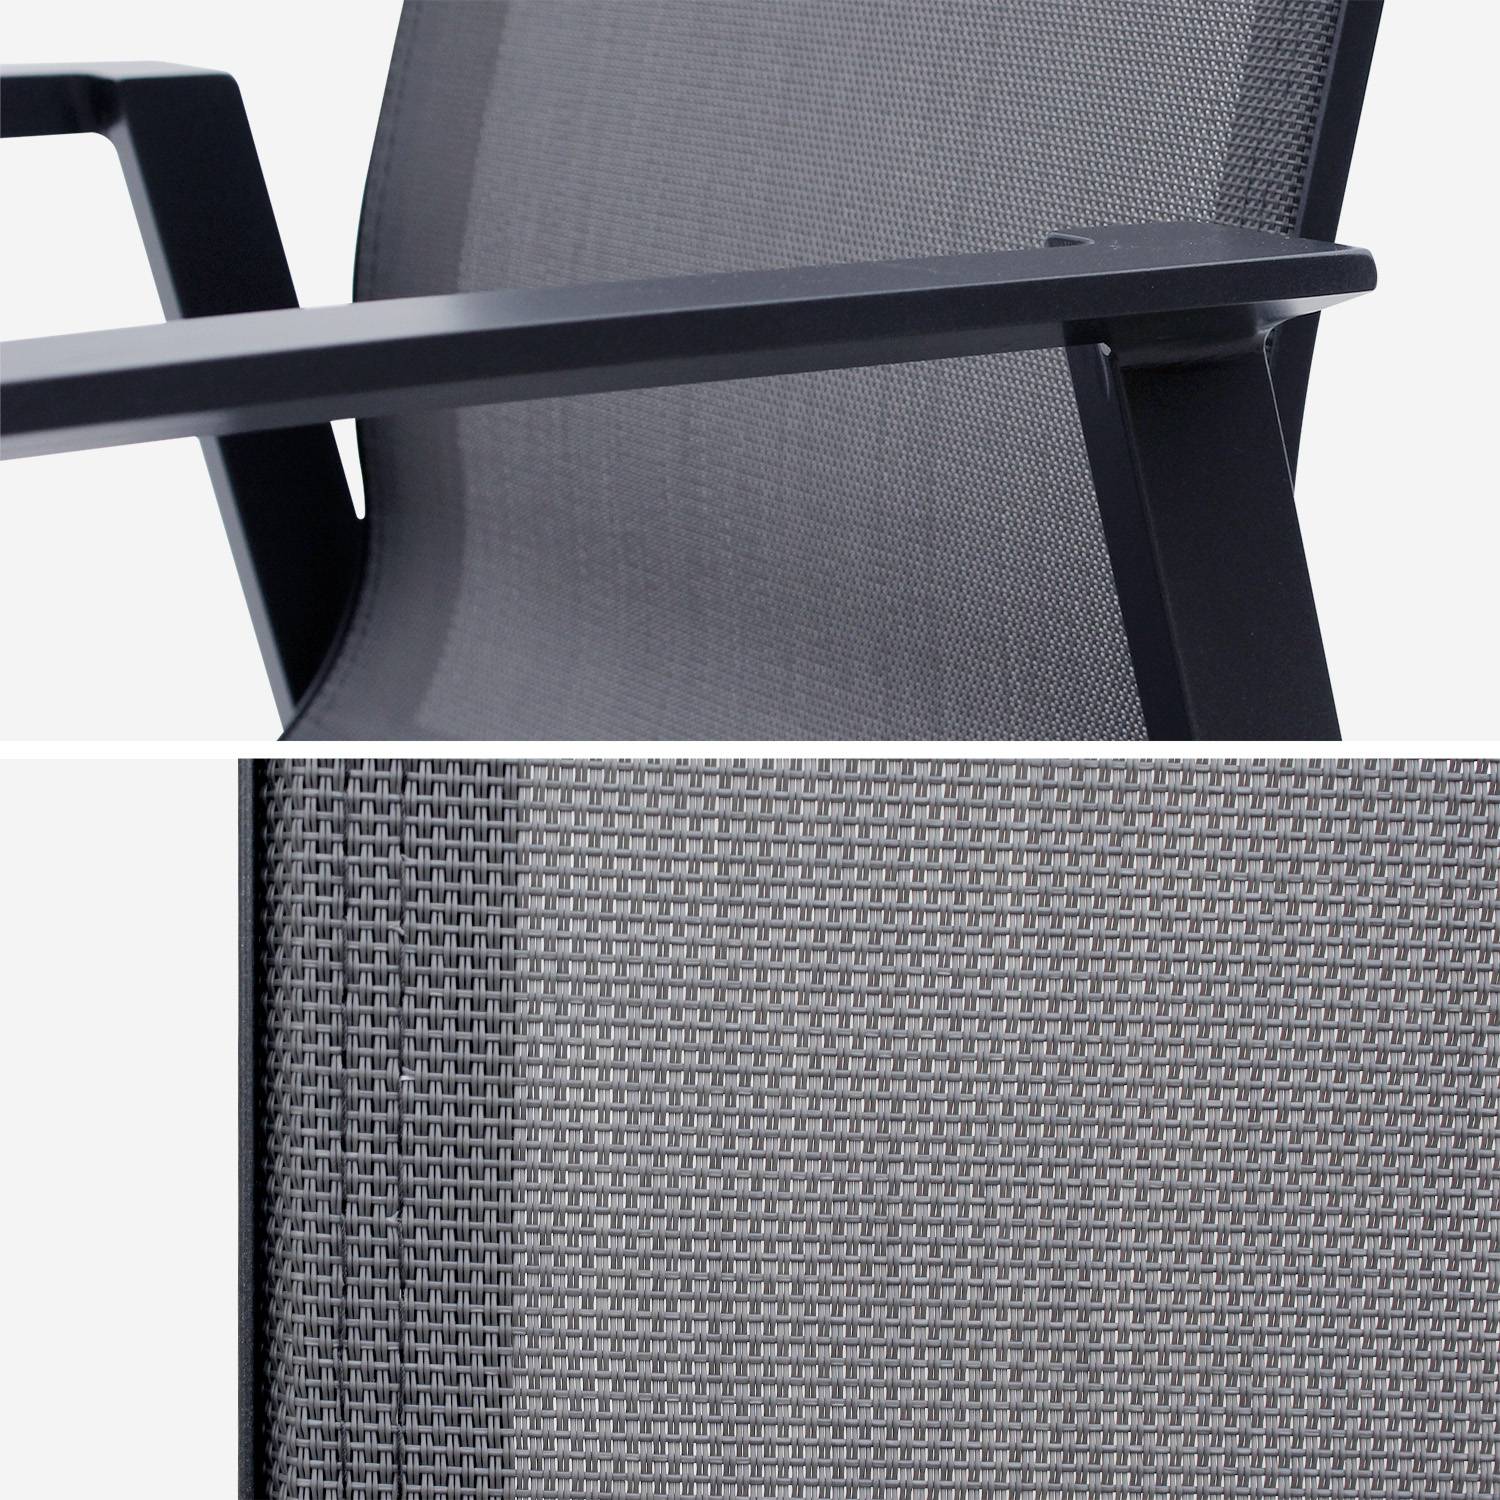 Juego de 2 sillas - Washington - Aluminio antracita y textileno gris oscuro, apilables,sweeek,Photo4